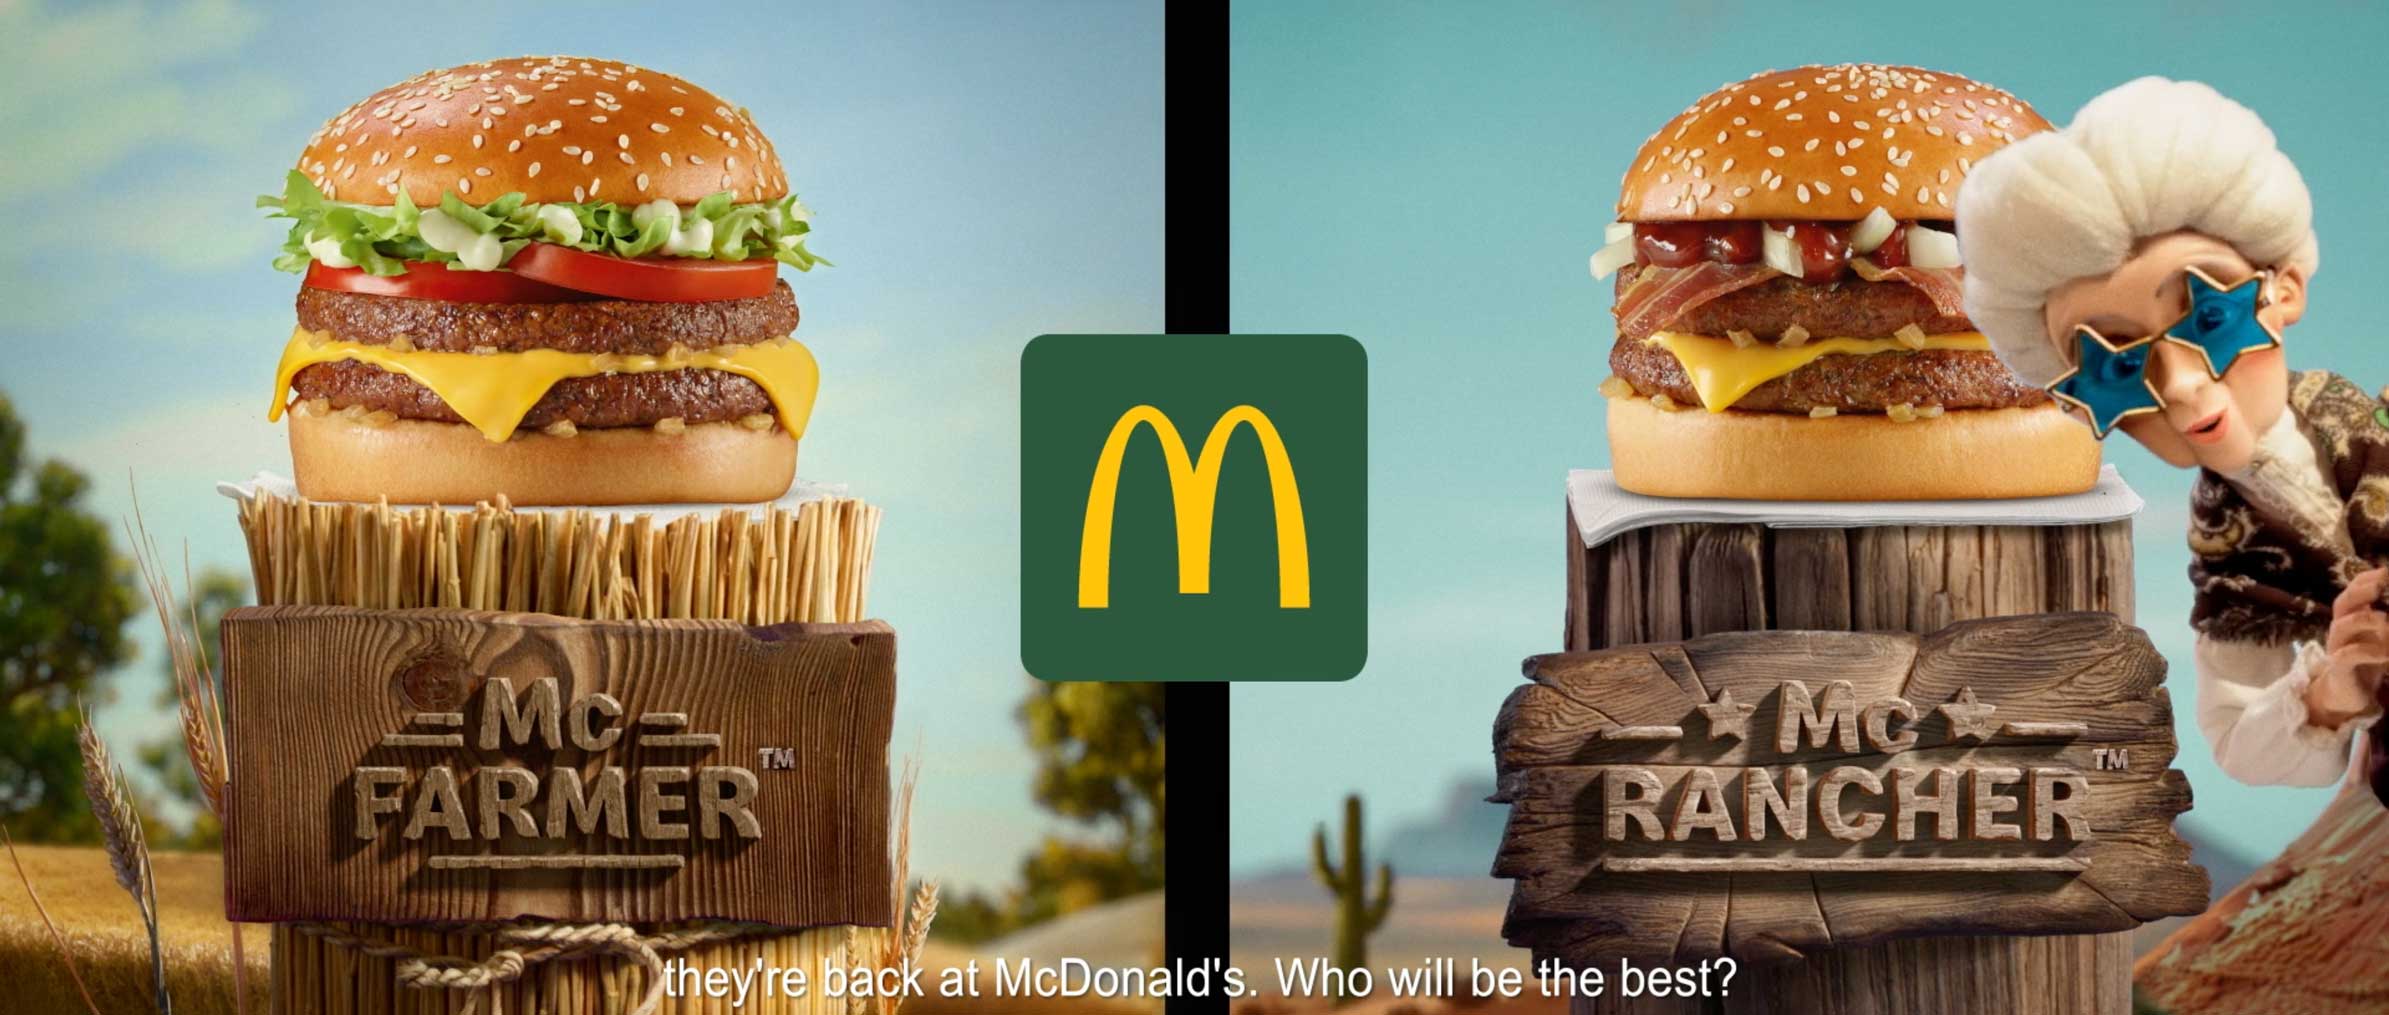 Aardman and Jungler McDonalds McFarmer vs McRancher | STASH MAGAZINE